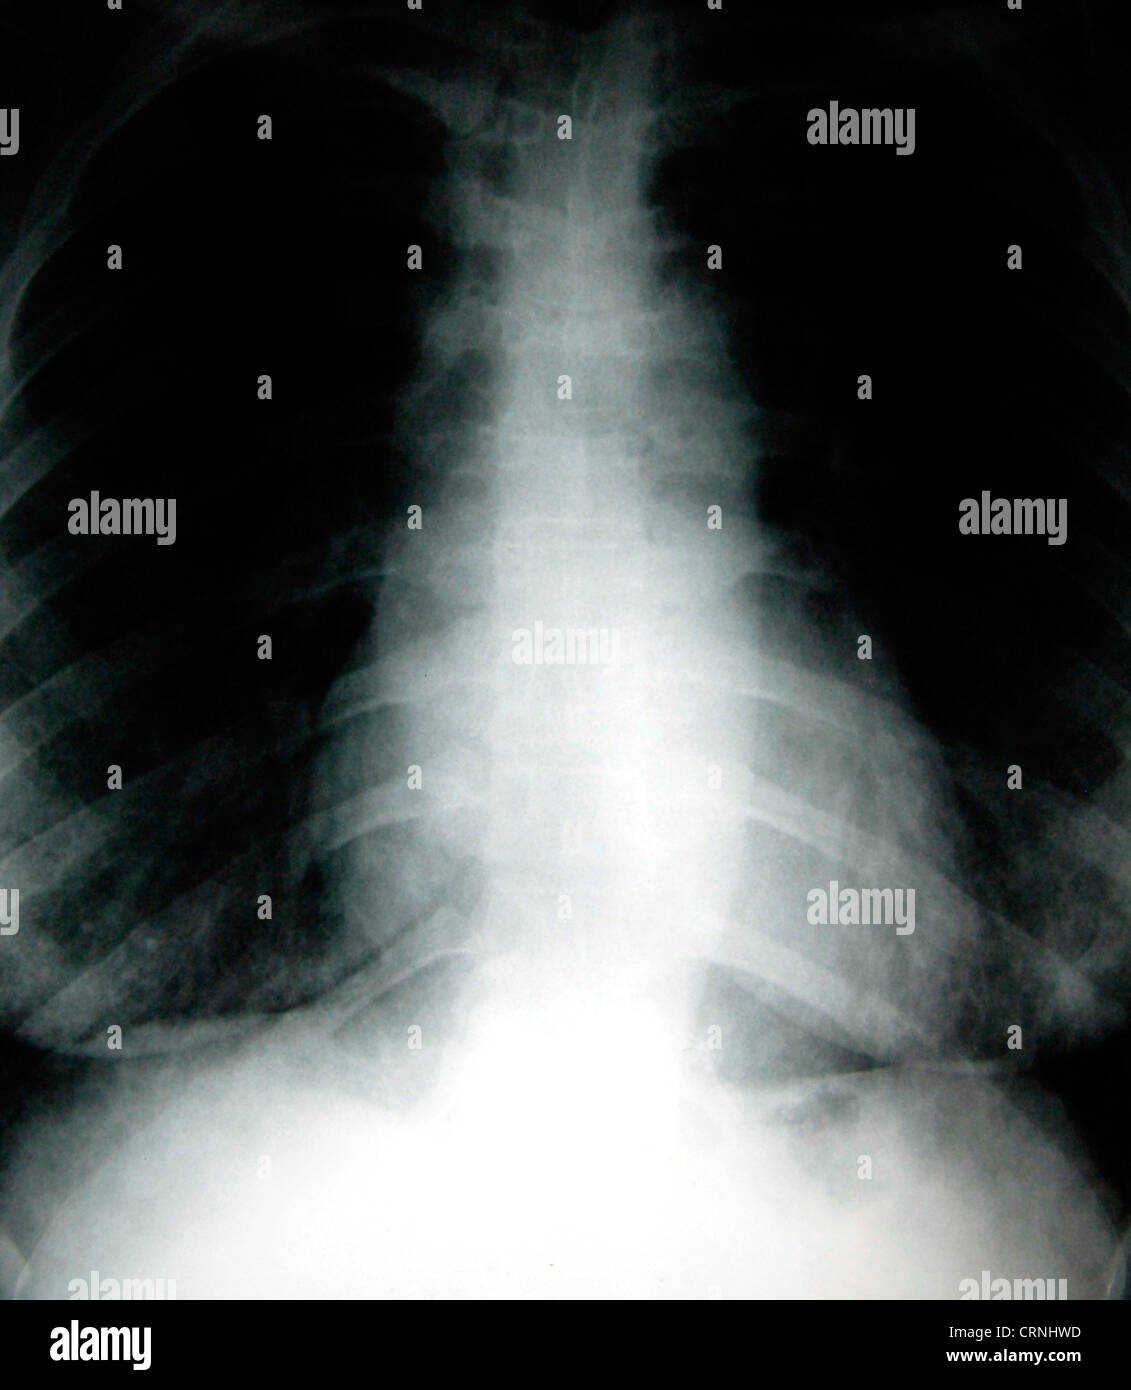 Raggi X di un uomo in una gabbia toracica. Foto Stock